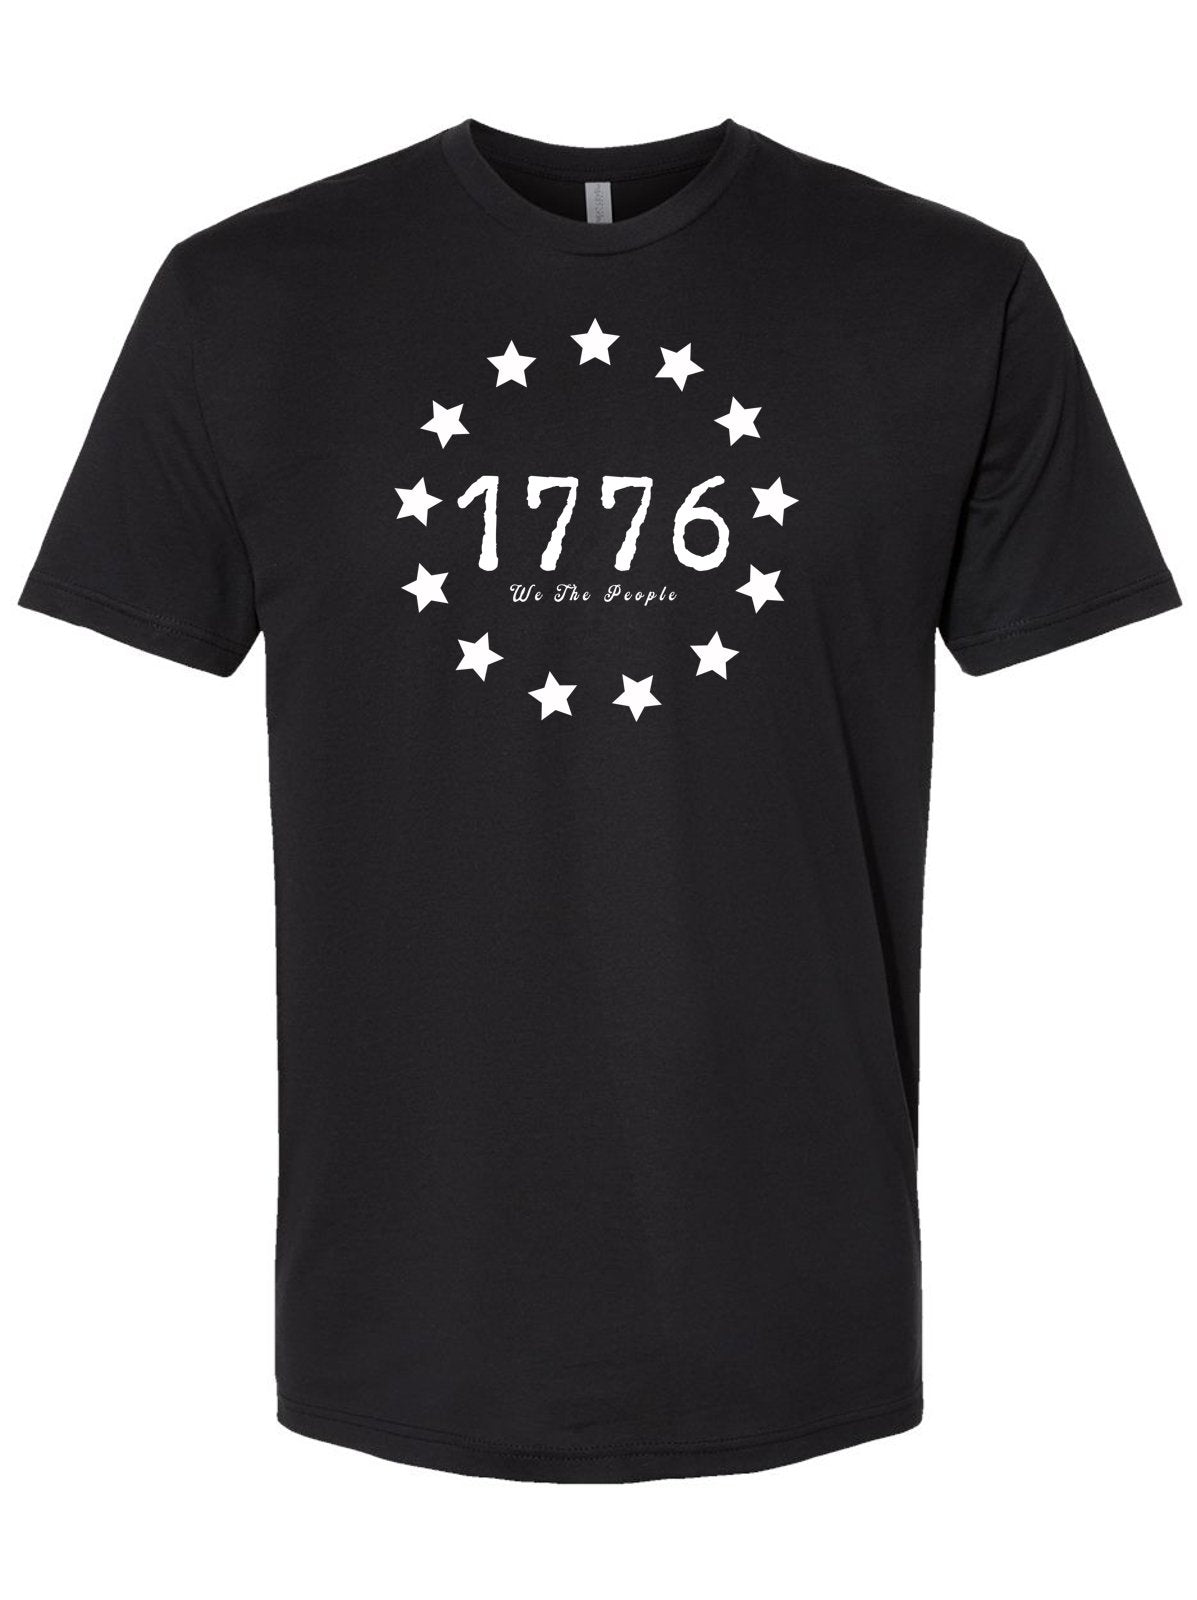 1776 13 Star Edition T-Shirt | Patriotic Apparel for American Patriots -